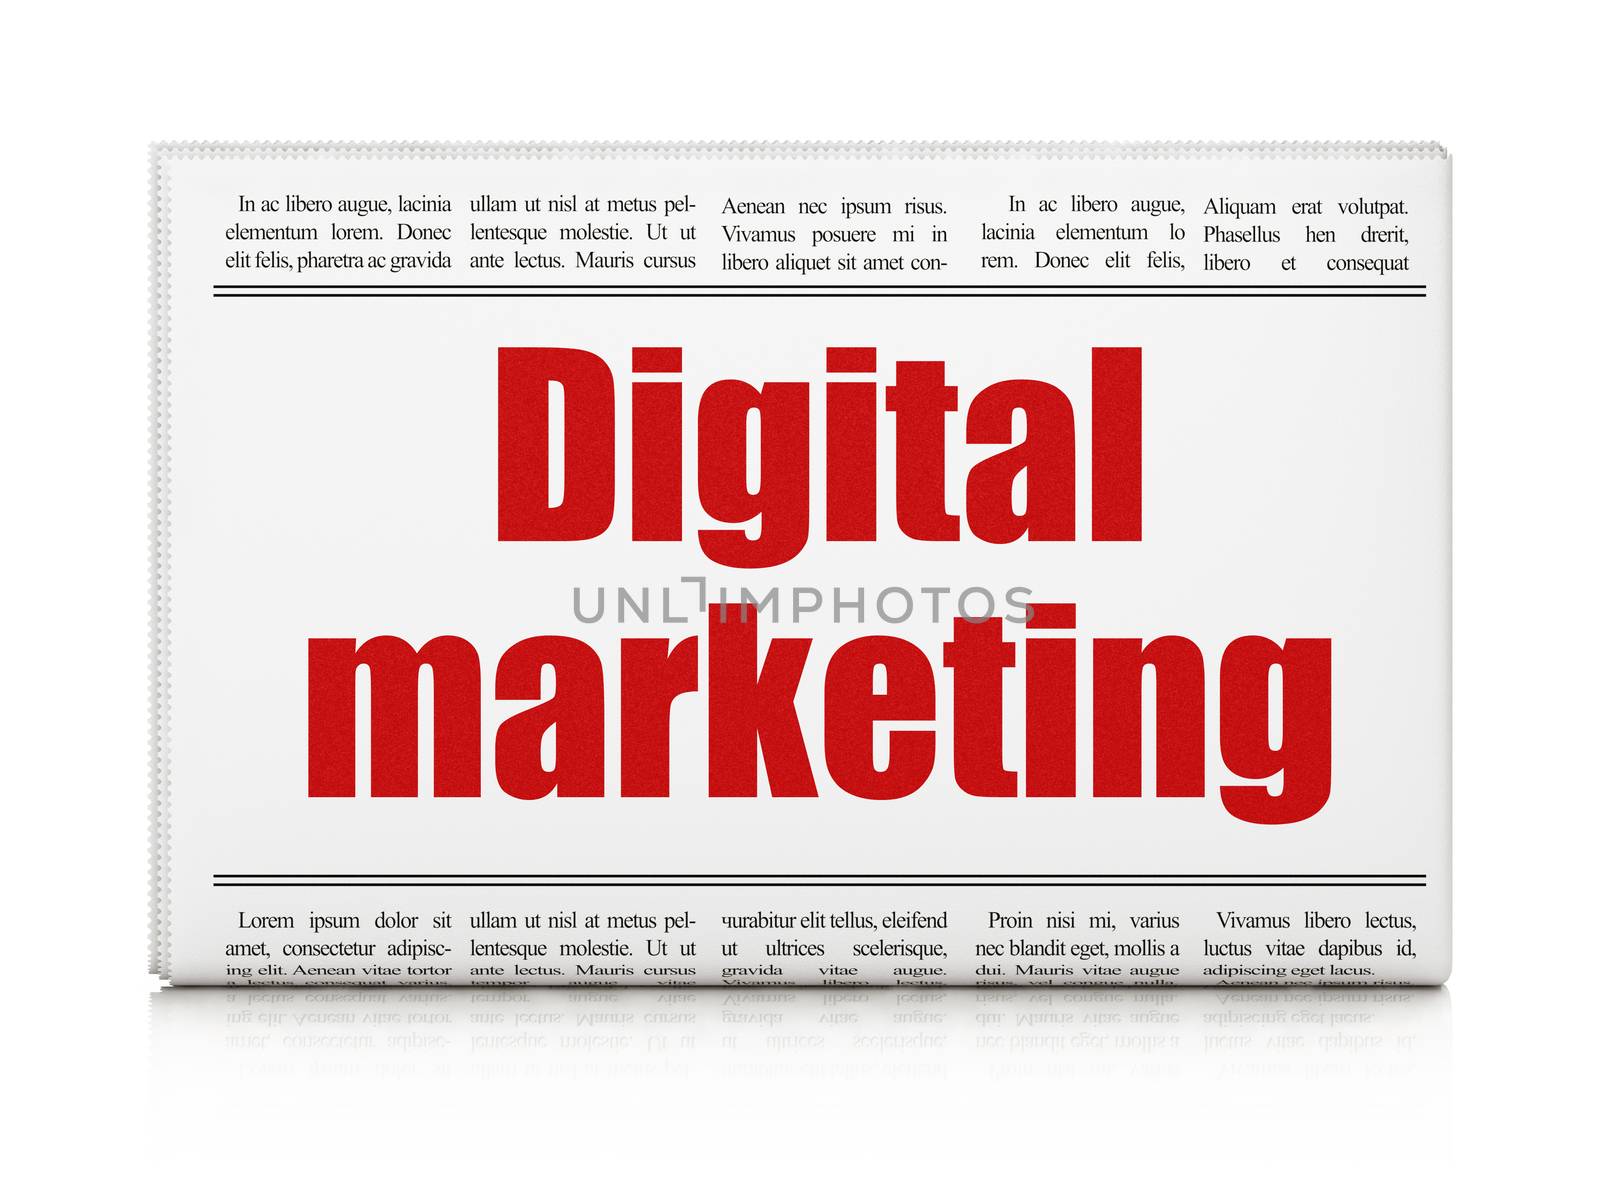 Marketing concept: newspaper headline Digital Marketing on White background, 3d render